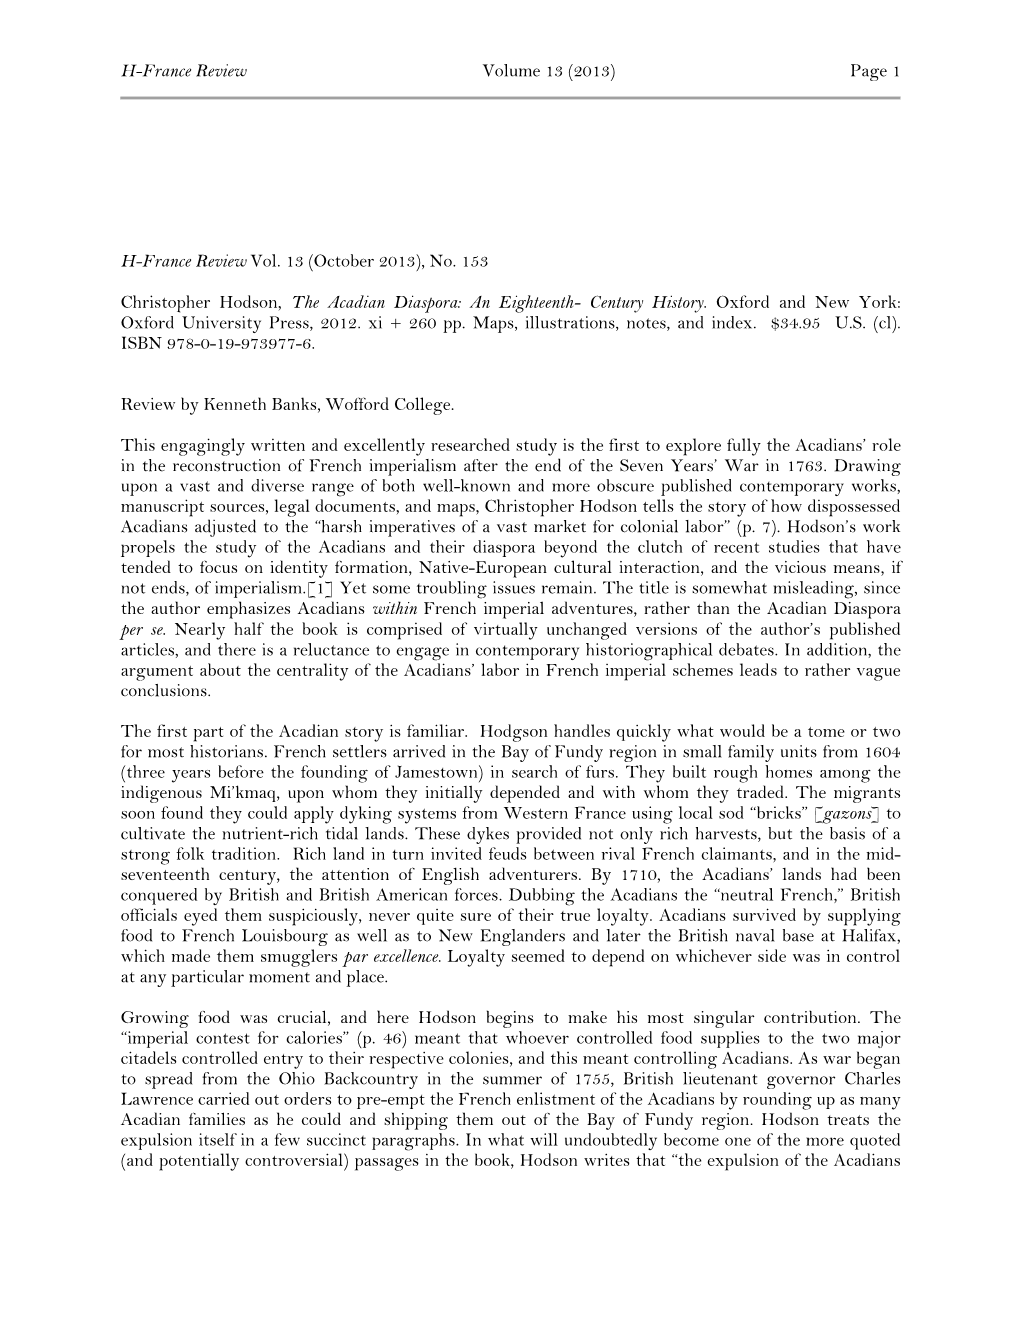 H-France Review Vol. 13 (October 2013), No. 153 Christopher Hodson